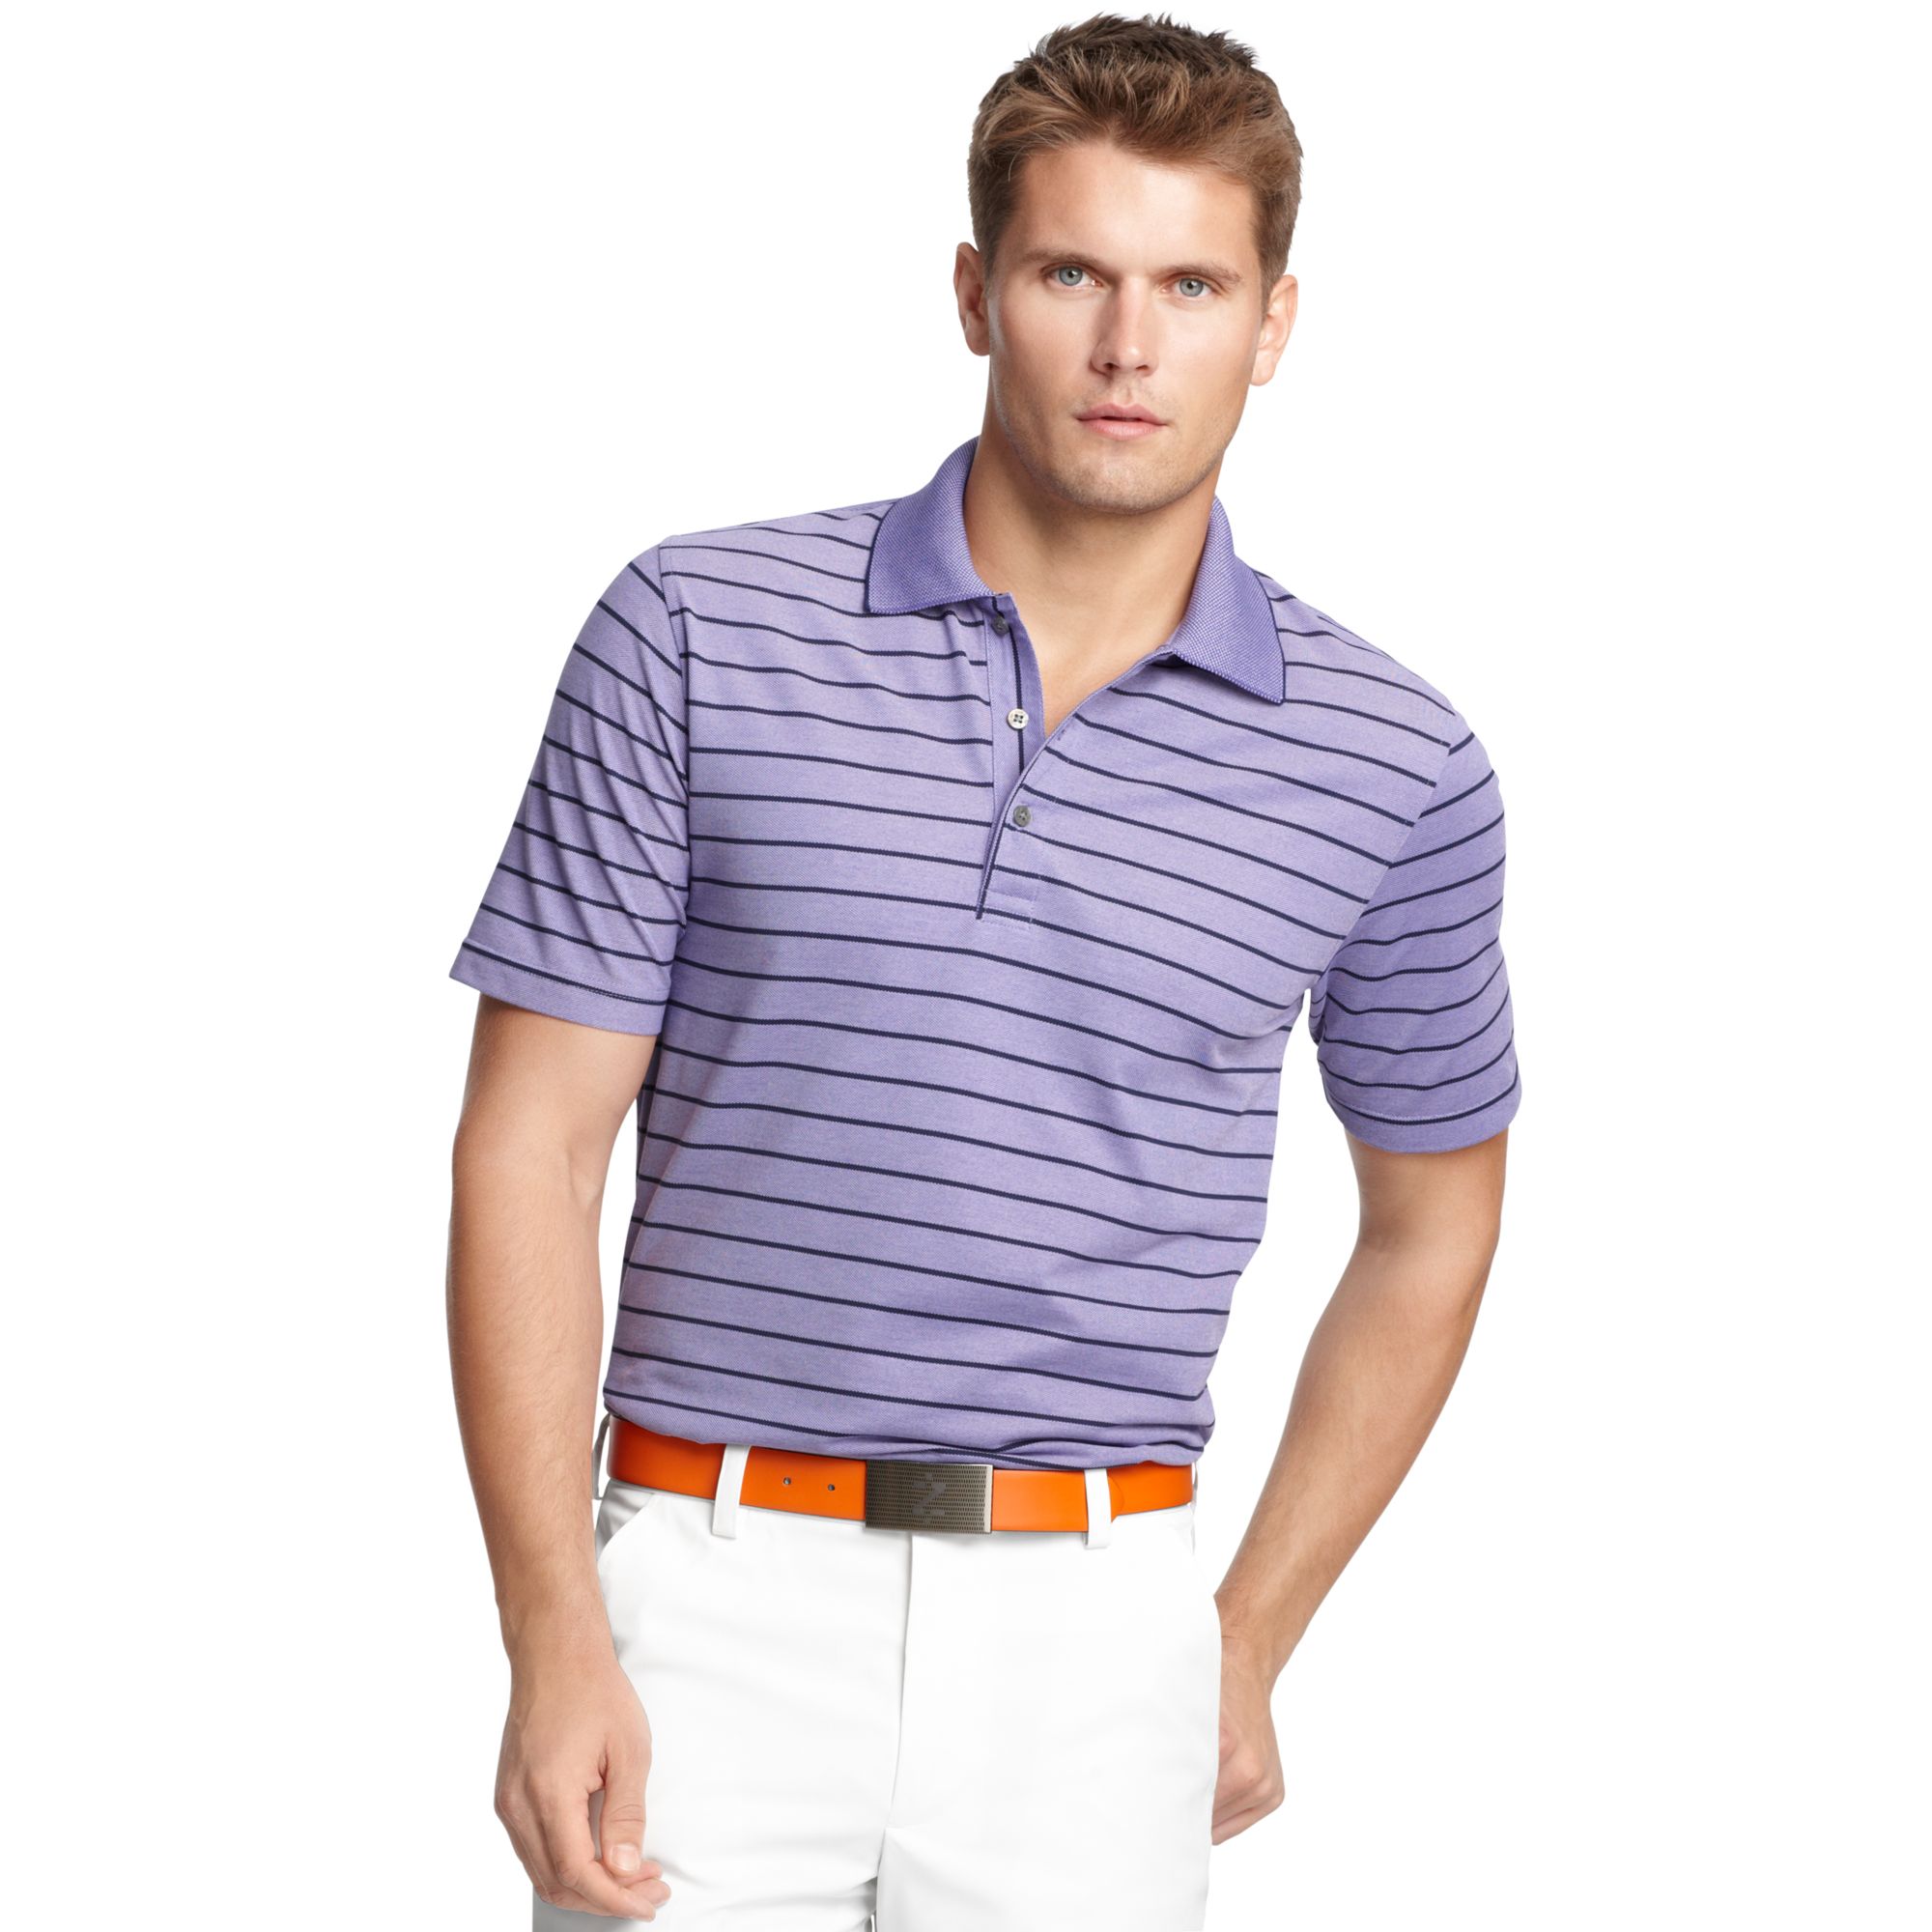 macys golf shirts